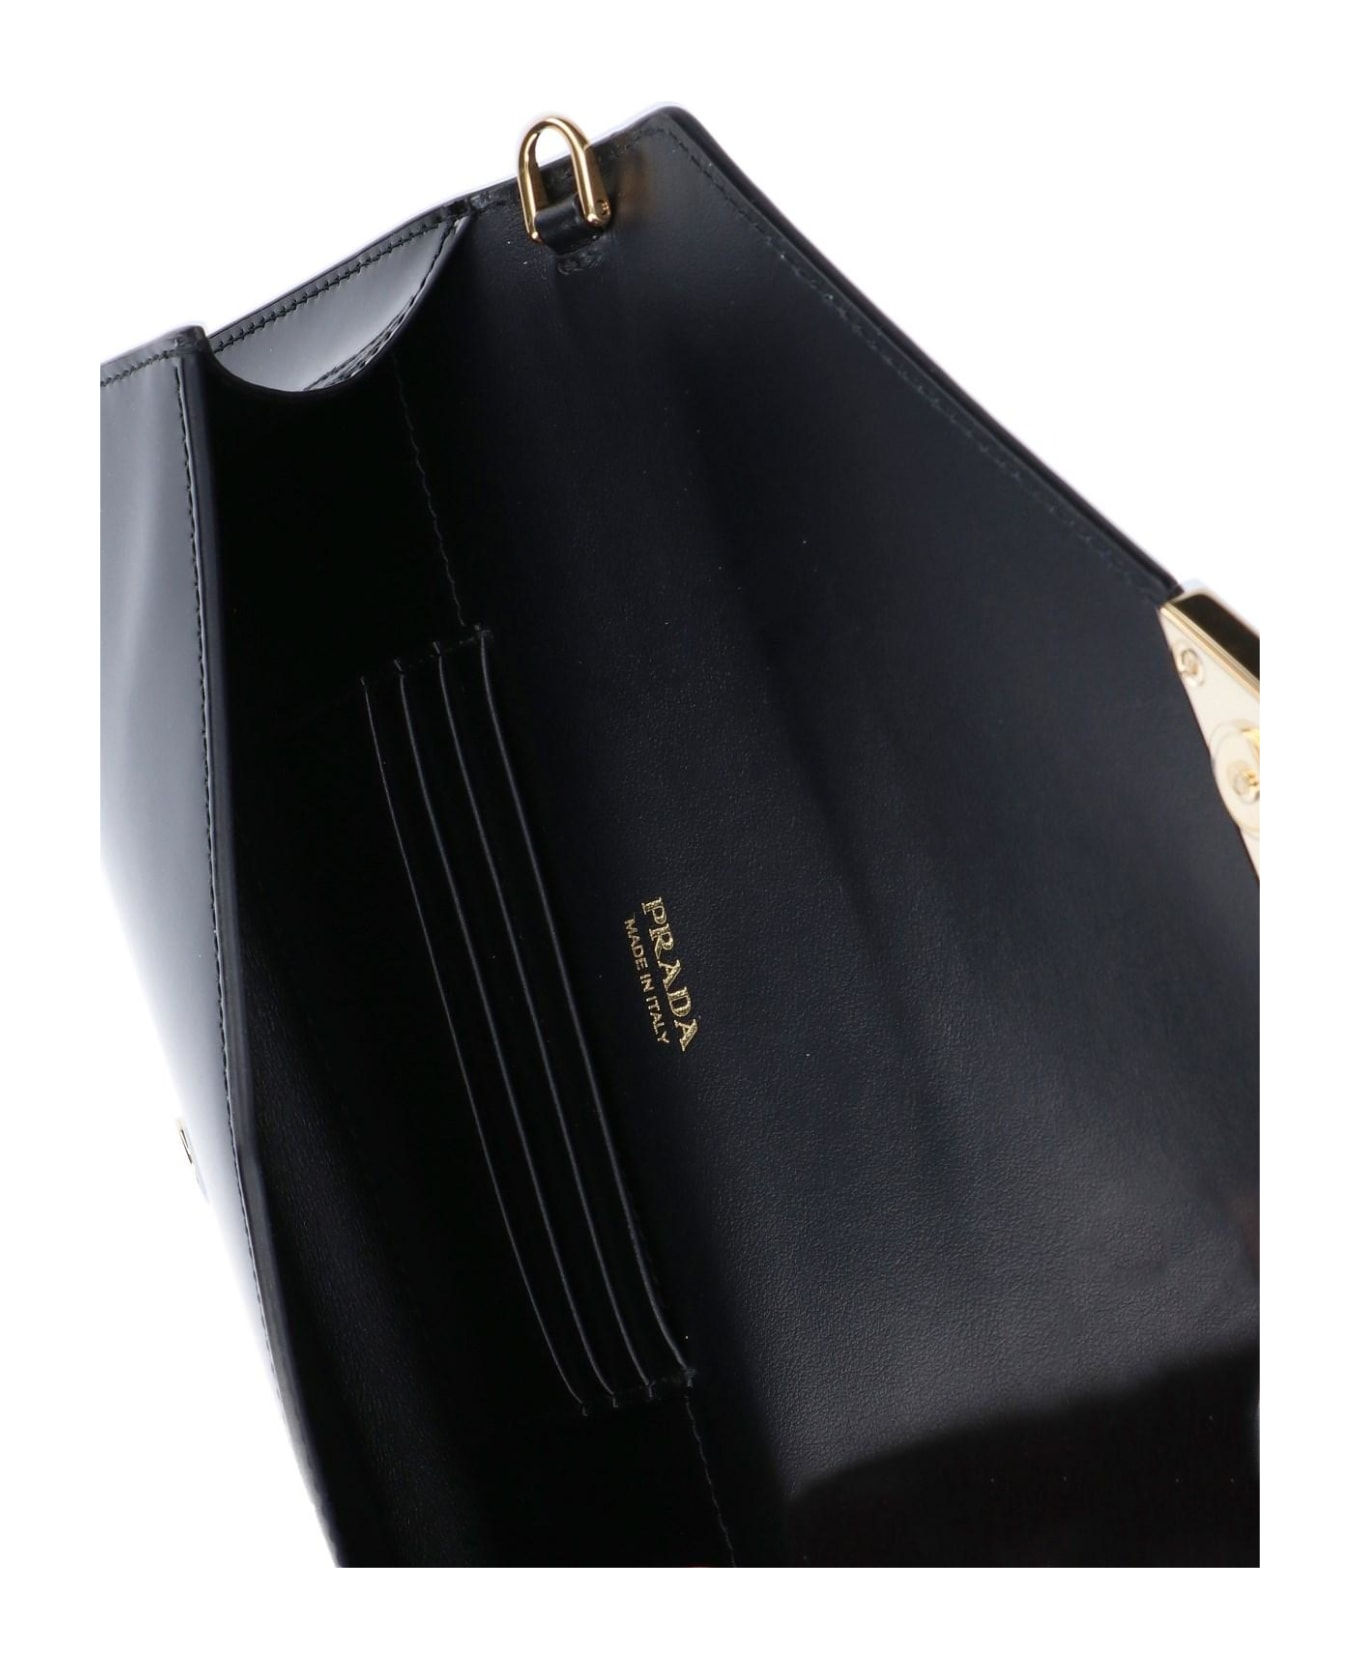 Prada Patent Leather Mini Bag - Nero